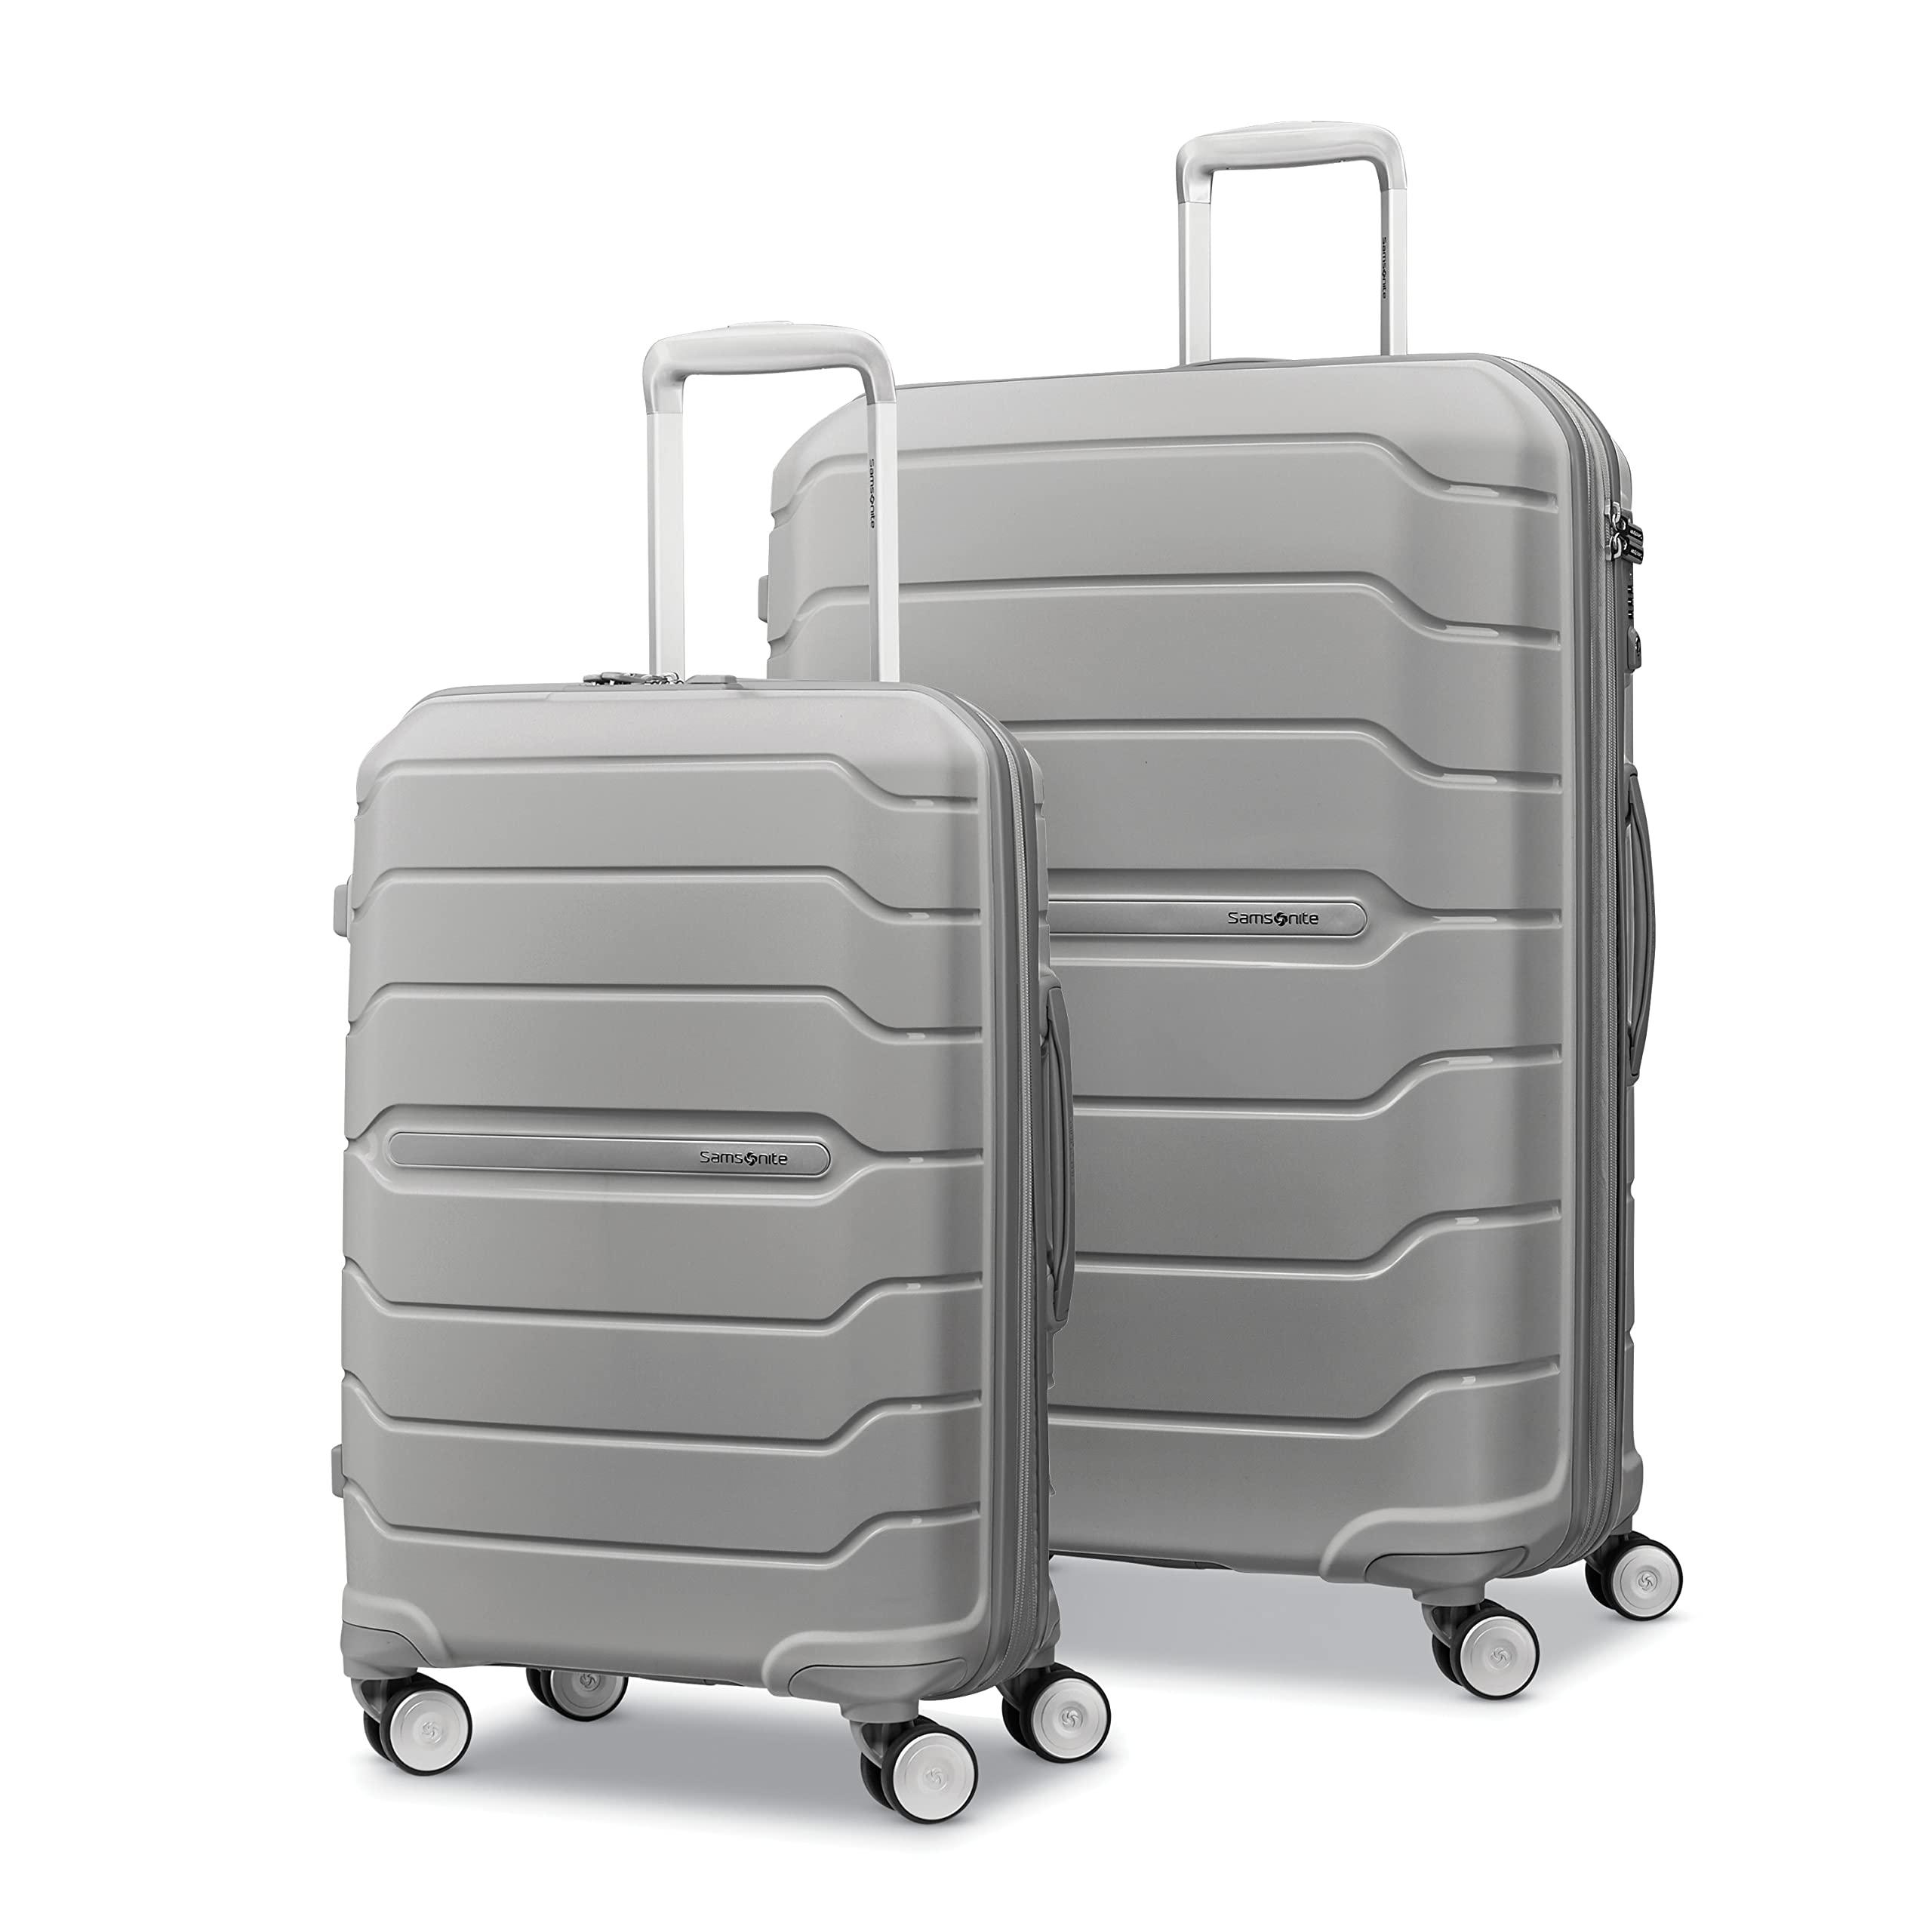 Samsonite Freeform Hardside Expandable Luggage in Gray Lyst